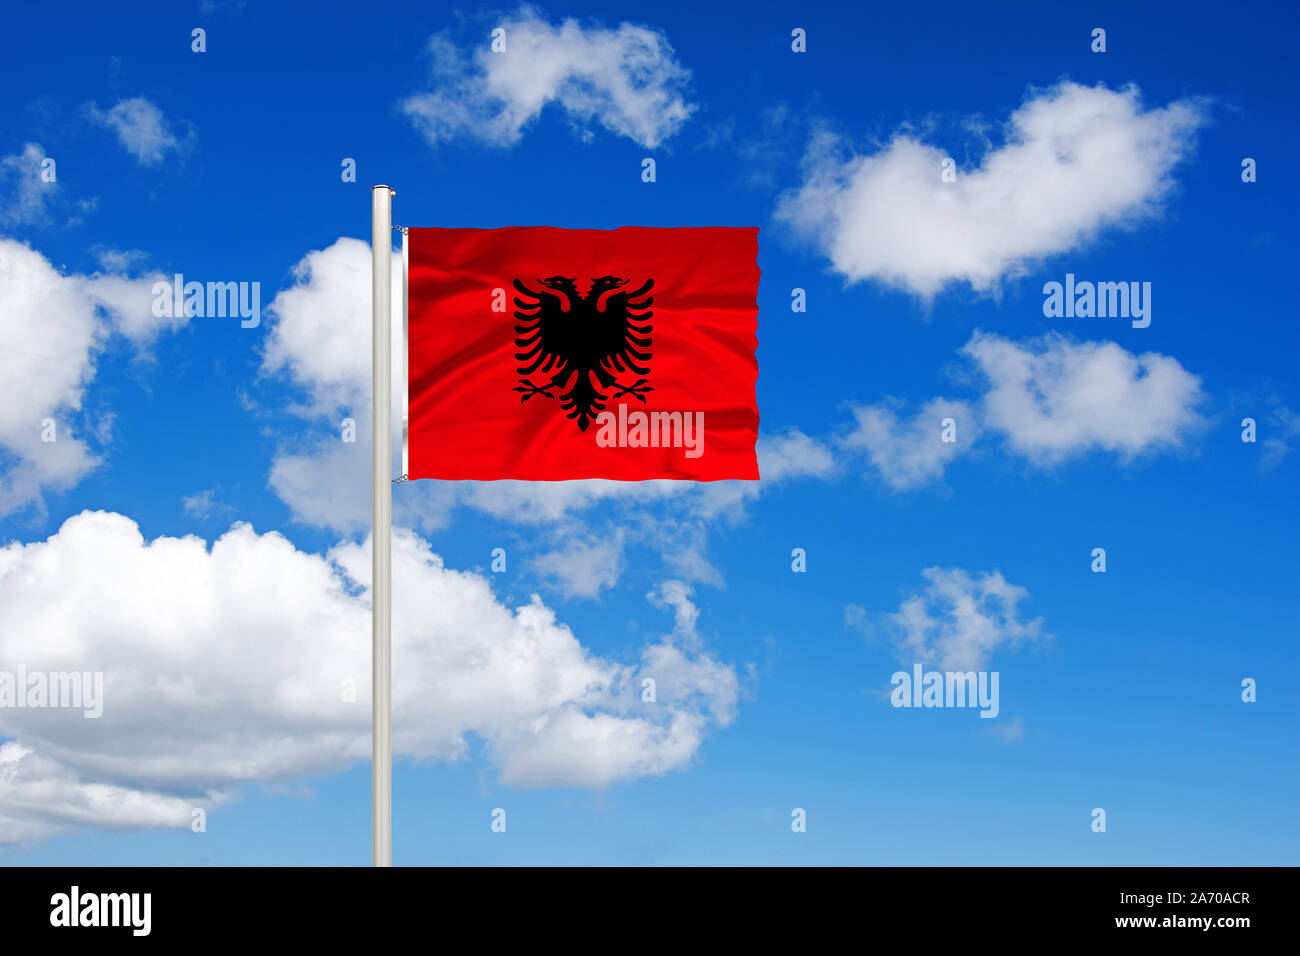 Balcanica, Albanien, Flagge, Nationalflagge, Fahne, Nationalfahne, Cumulus Wolken vor blauen Himmel, Foto Stock